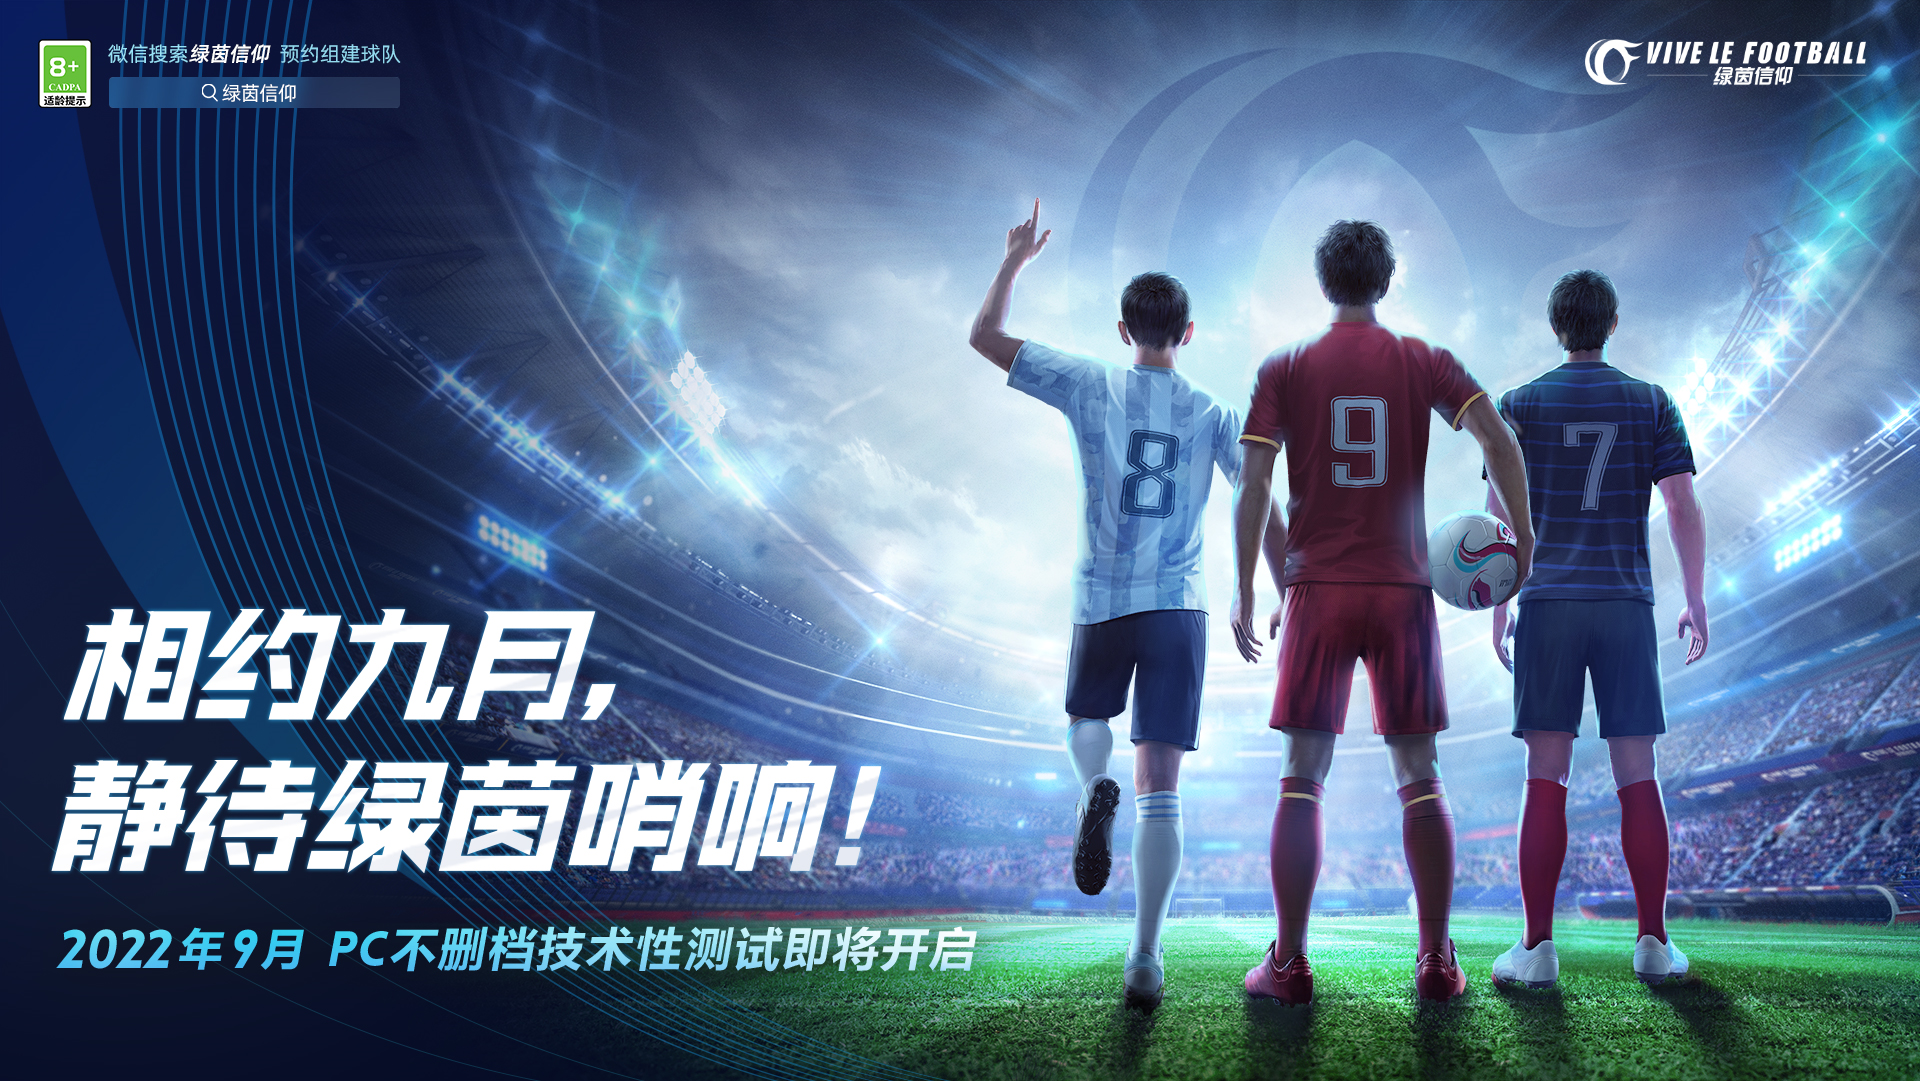 Champion Soccer Star by 静 何